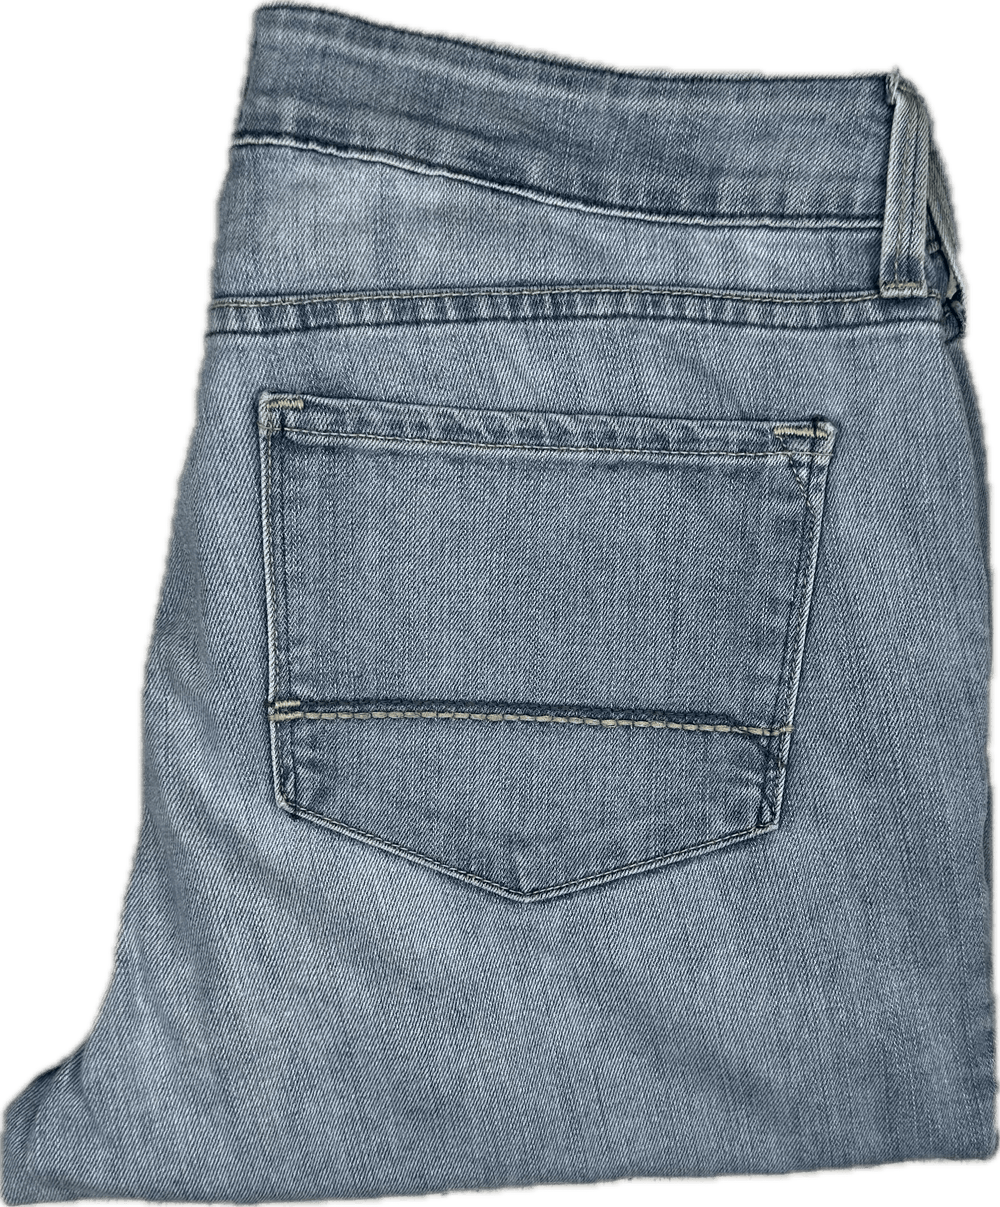 NYDJ - Lift & Tuck 'Ankle' Slim Leg Jeans -Size 8 US suit AU 12 - Jean Pool